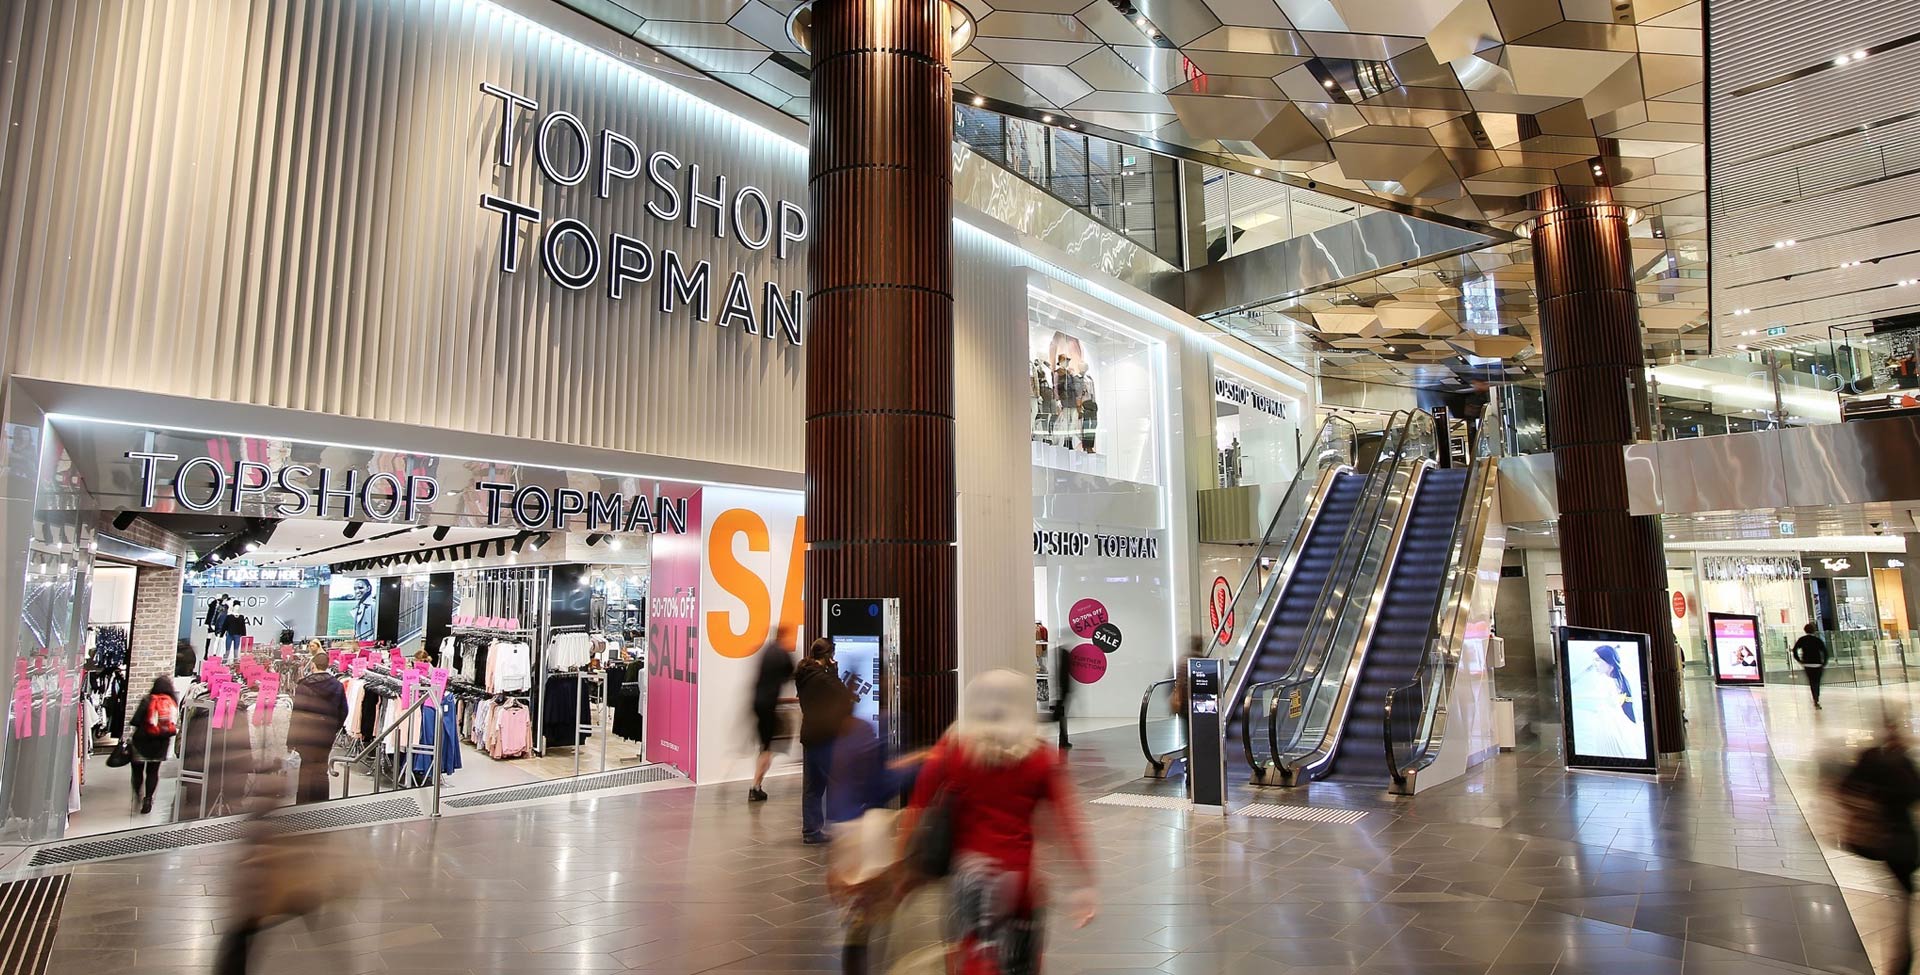 Emporium Mall Melbourne - successful design and branding concepts